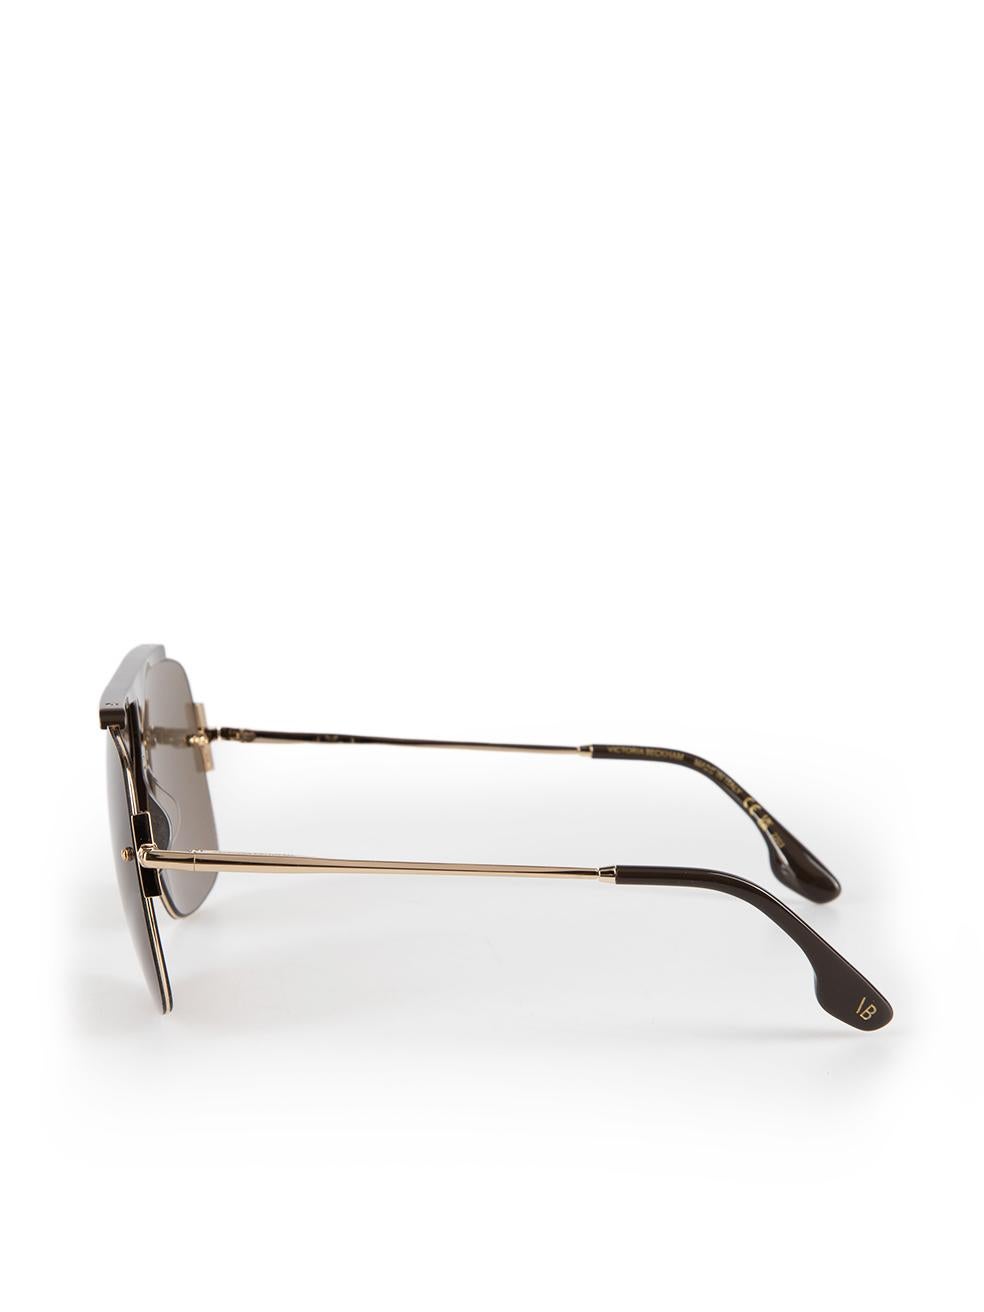 Victoria Beckham Mocha Navigator Frame Sunglasses For Sale 1